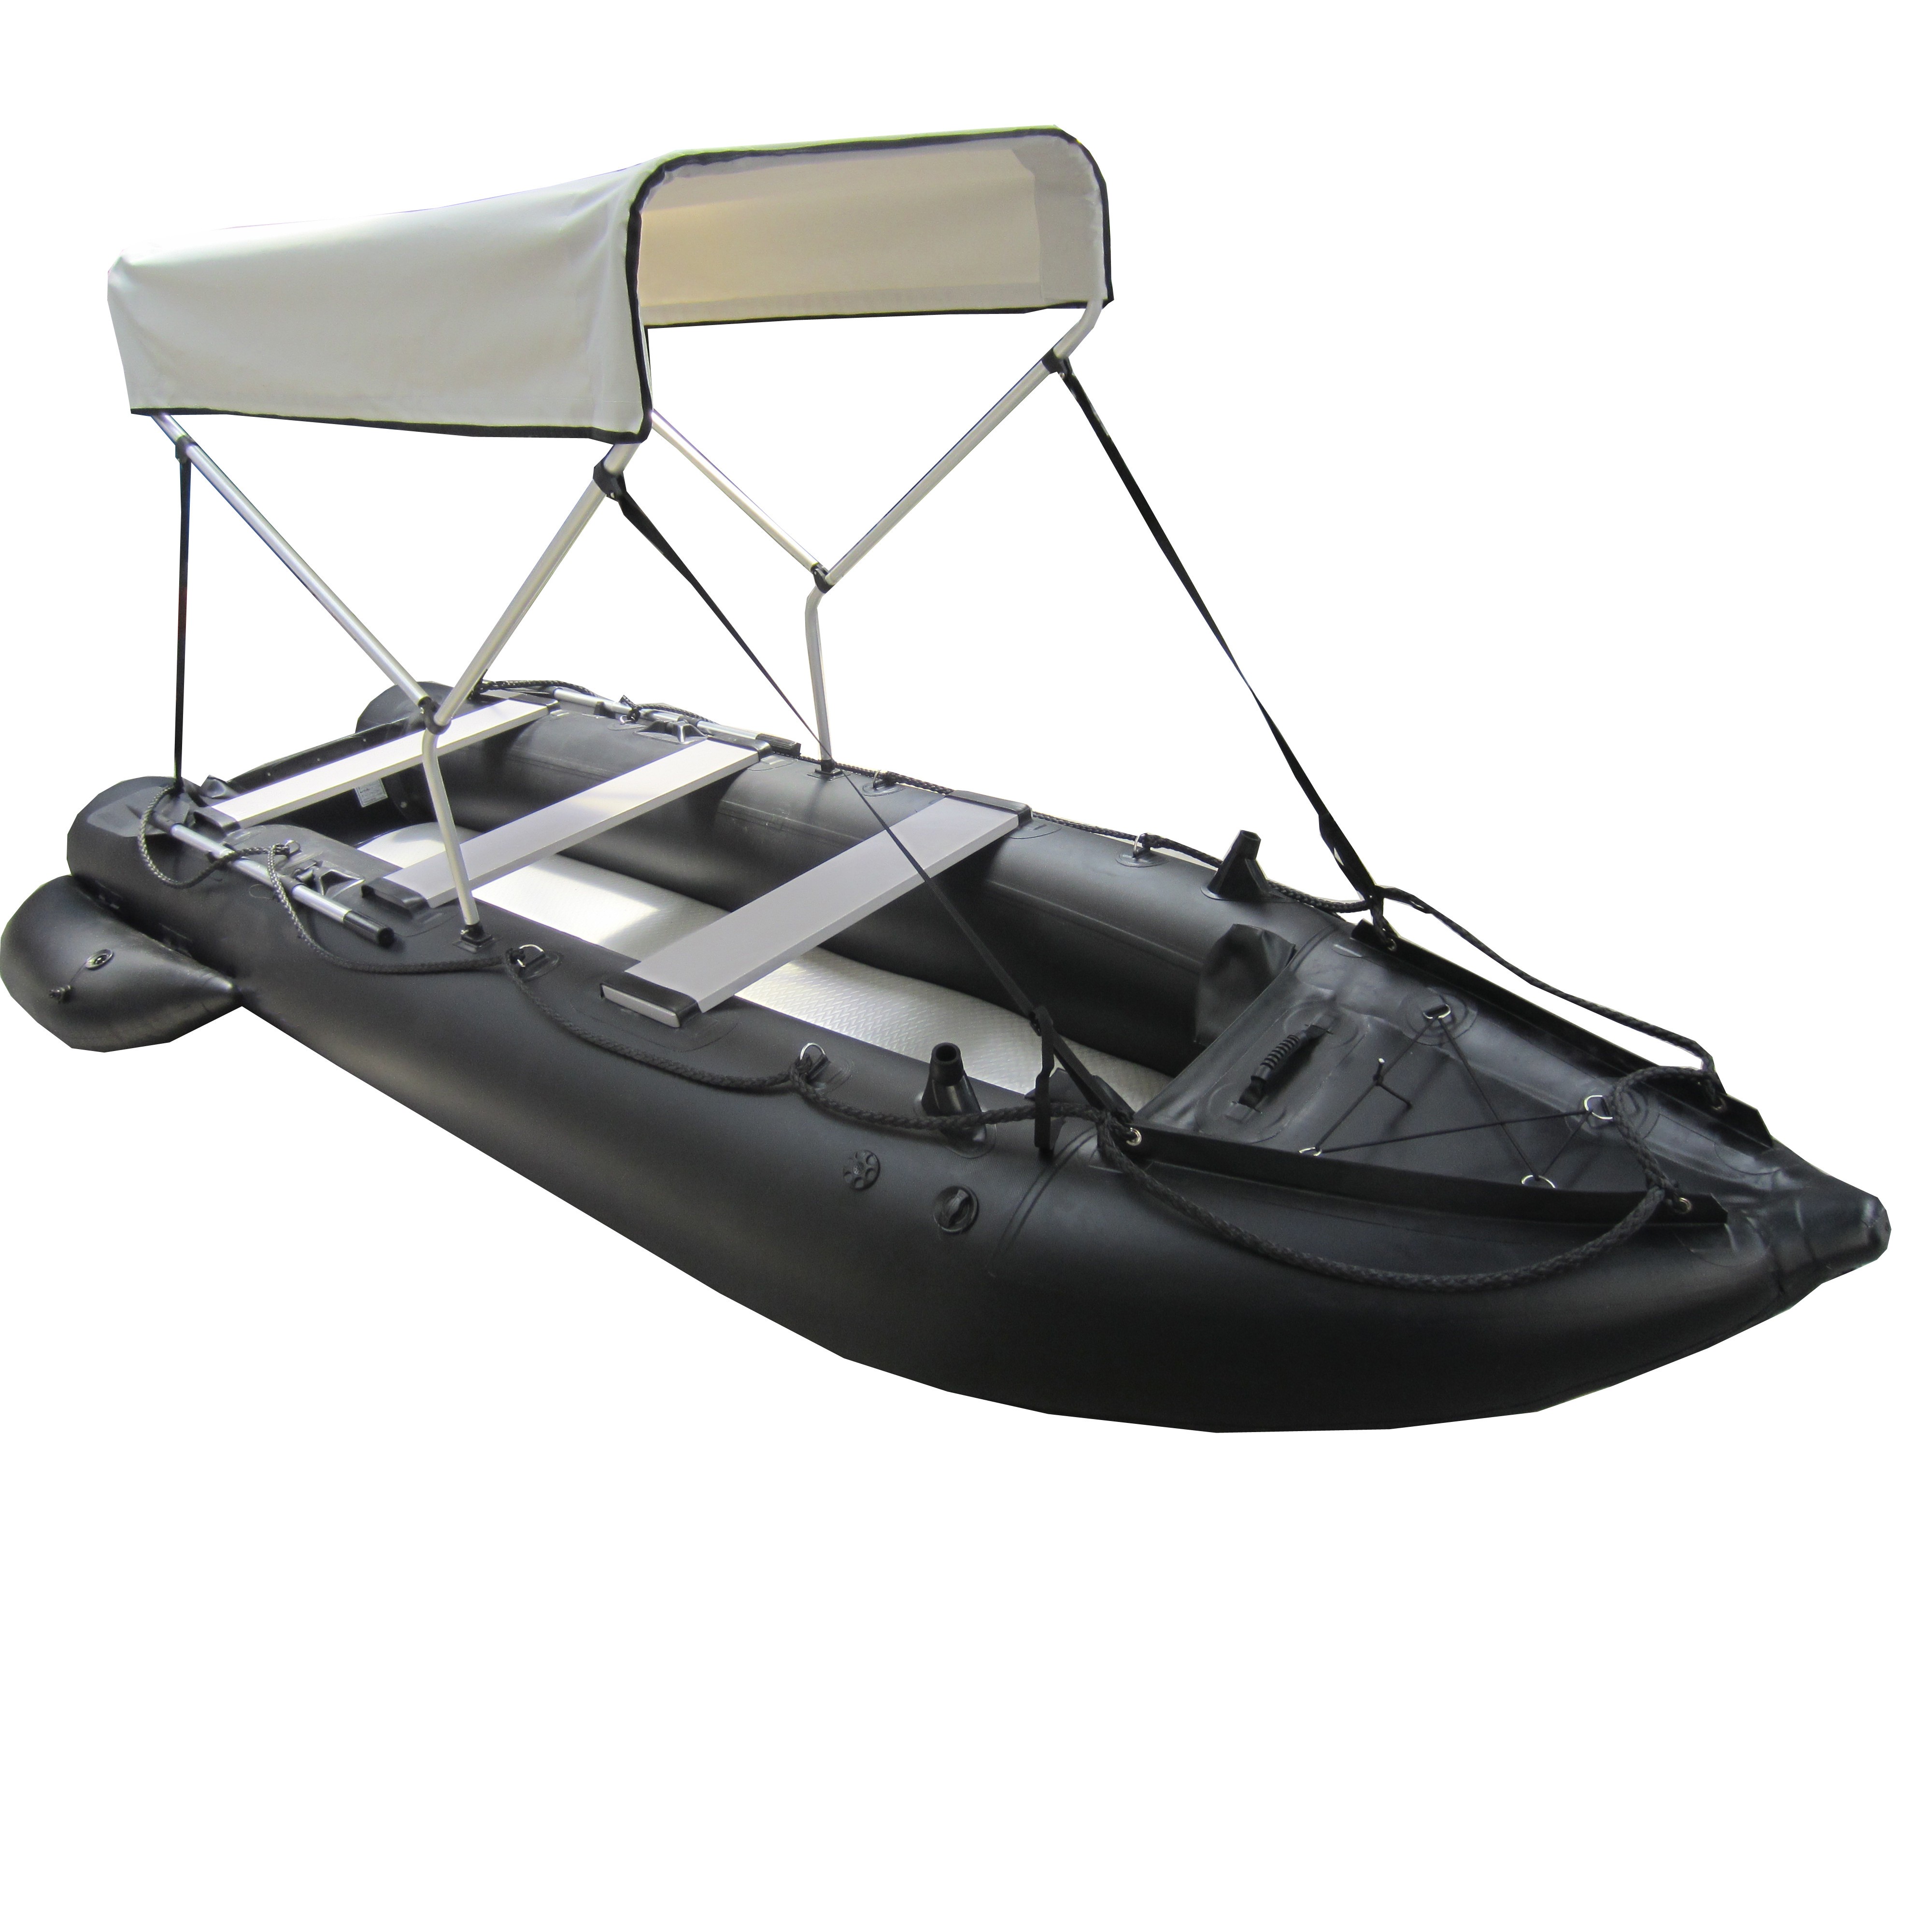 River kayak